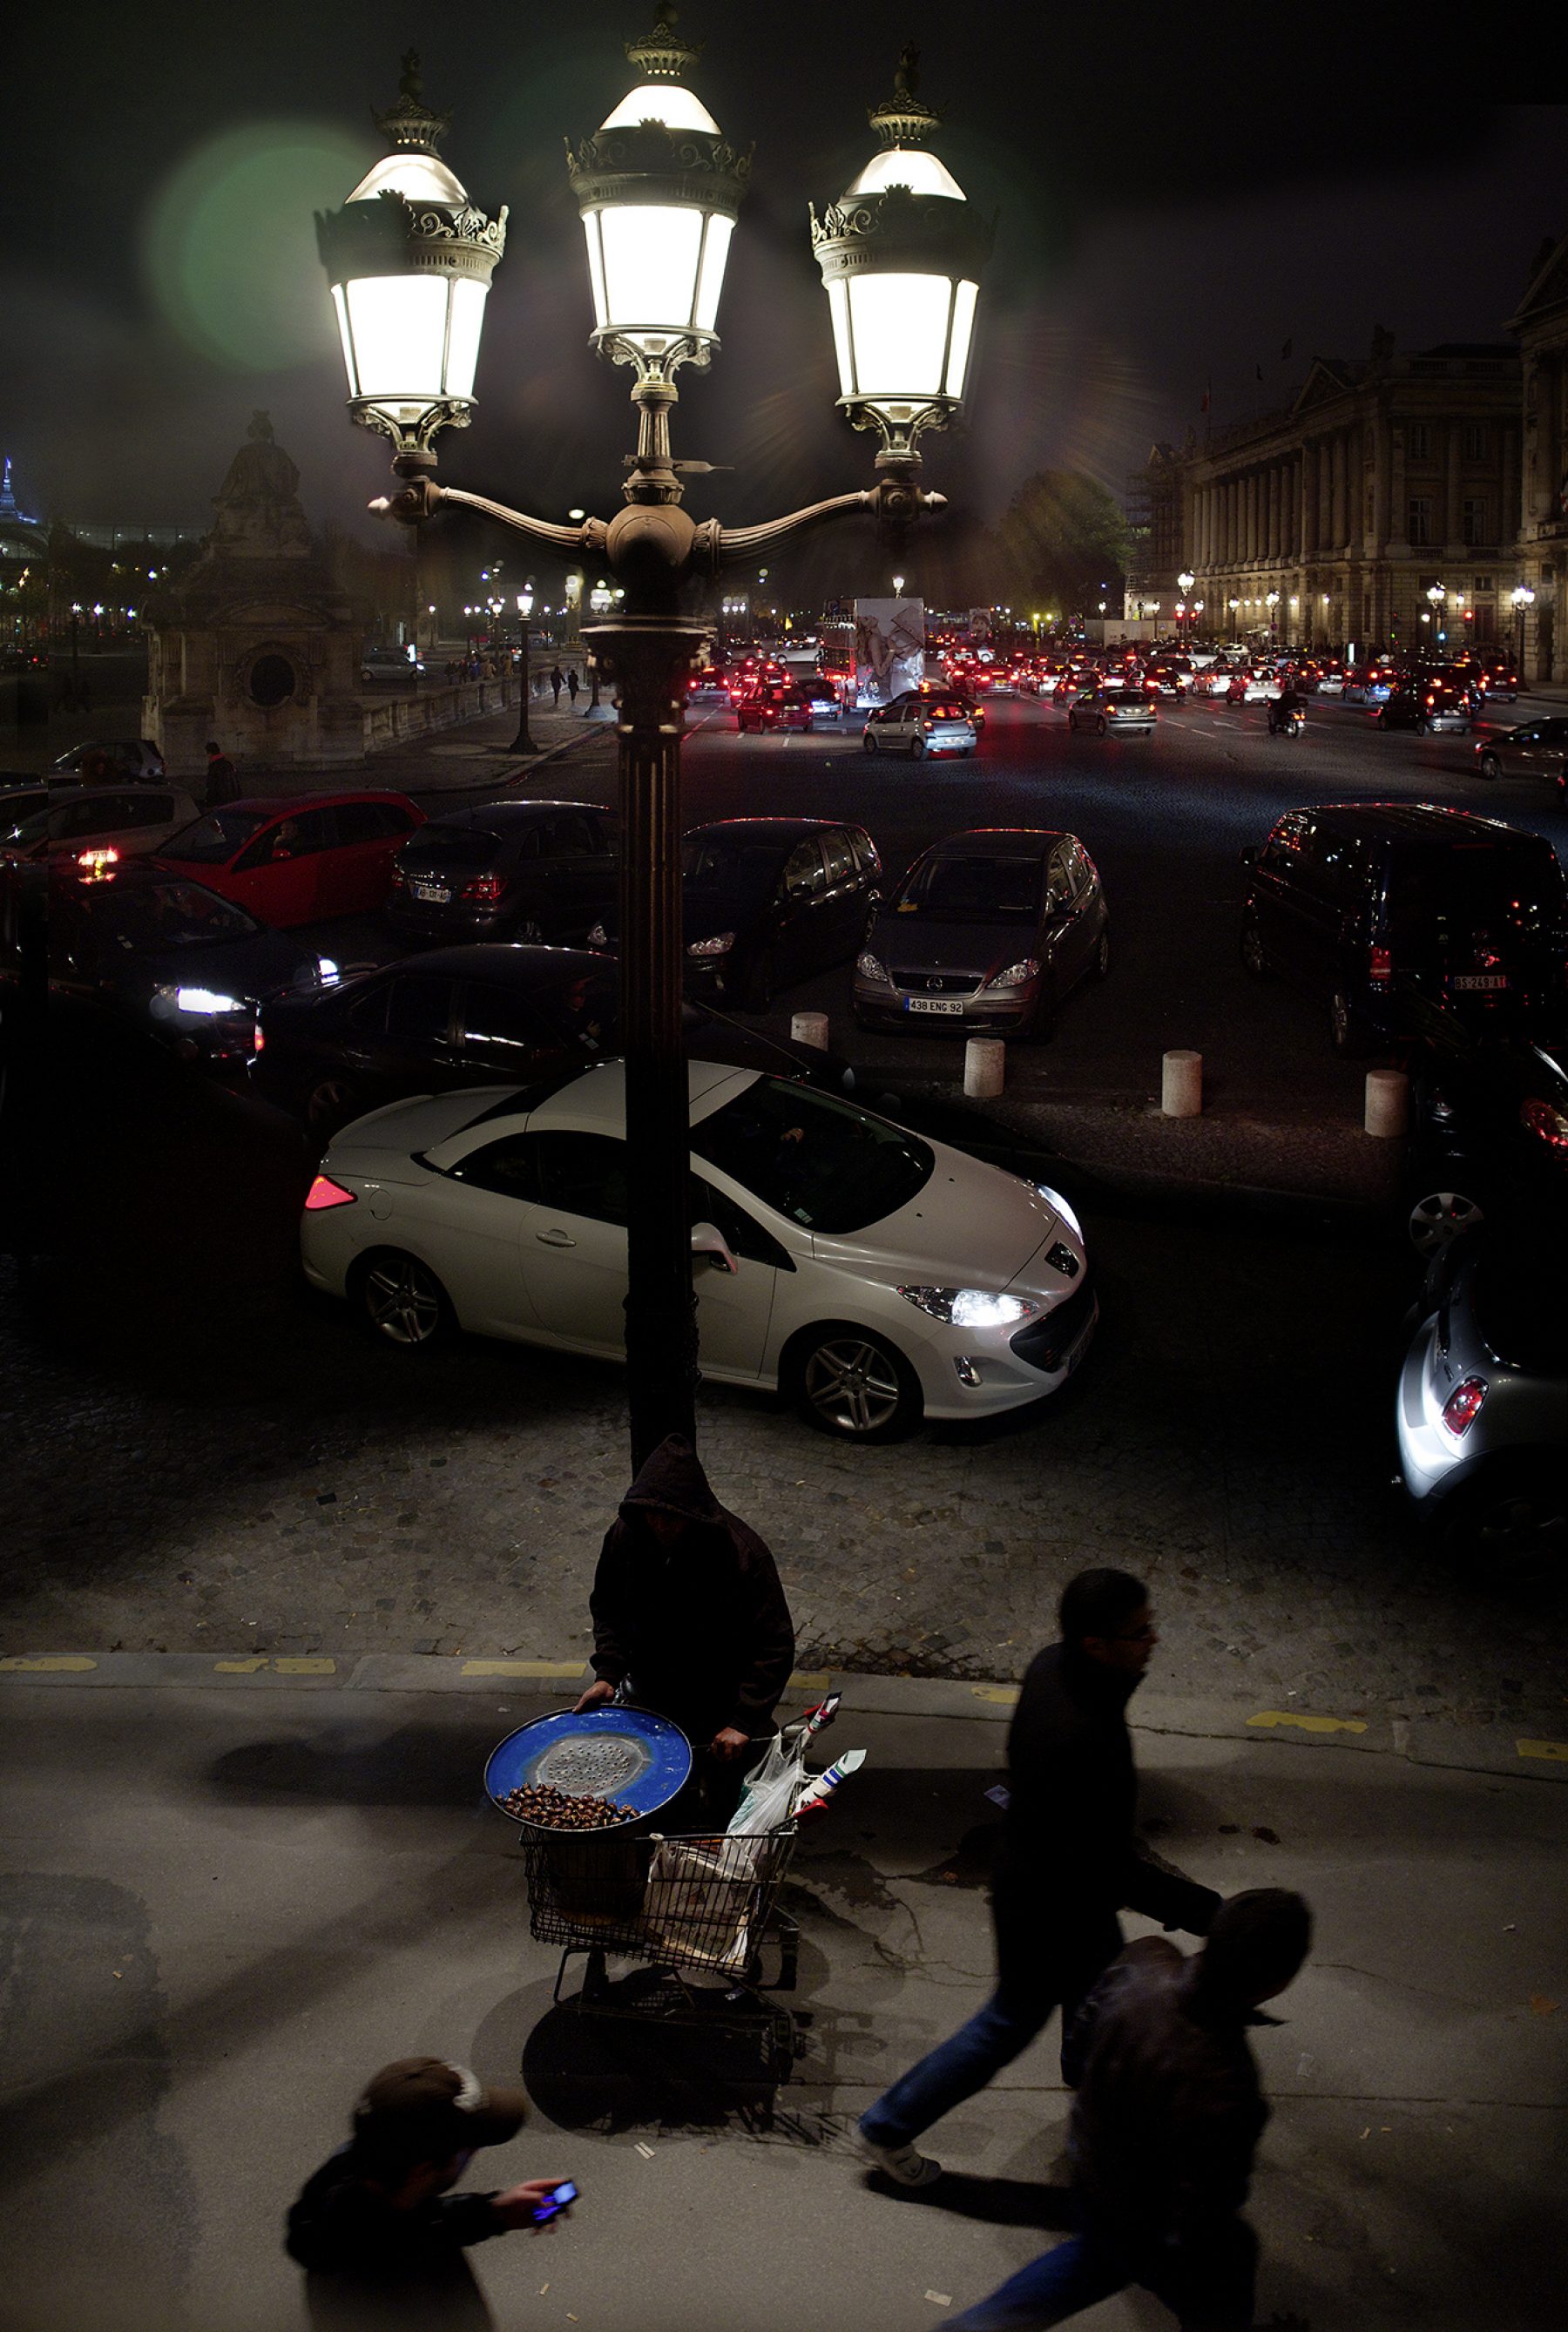 Place de la Concorde, Nacht, Maronenverkäufer, Straßenlaterne